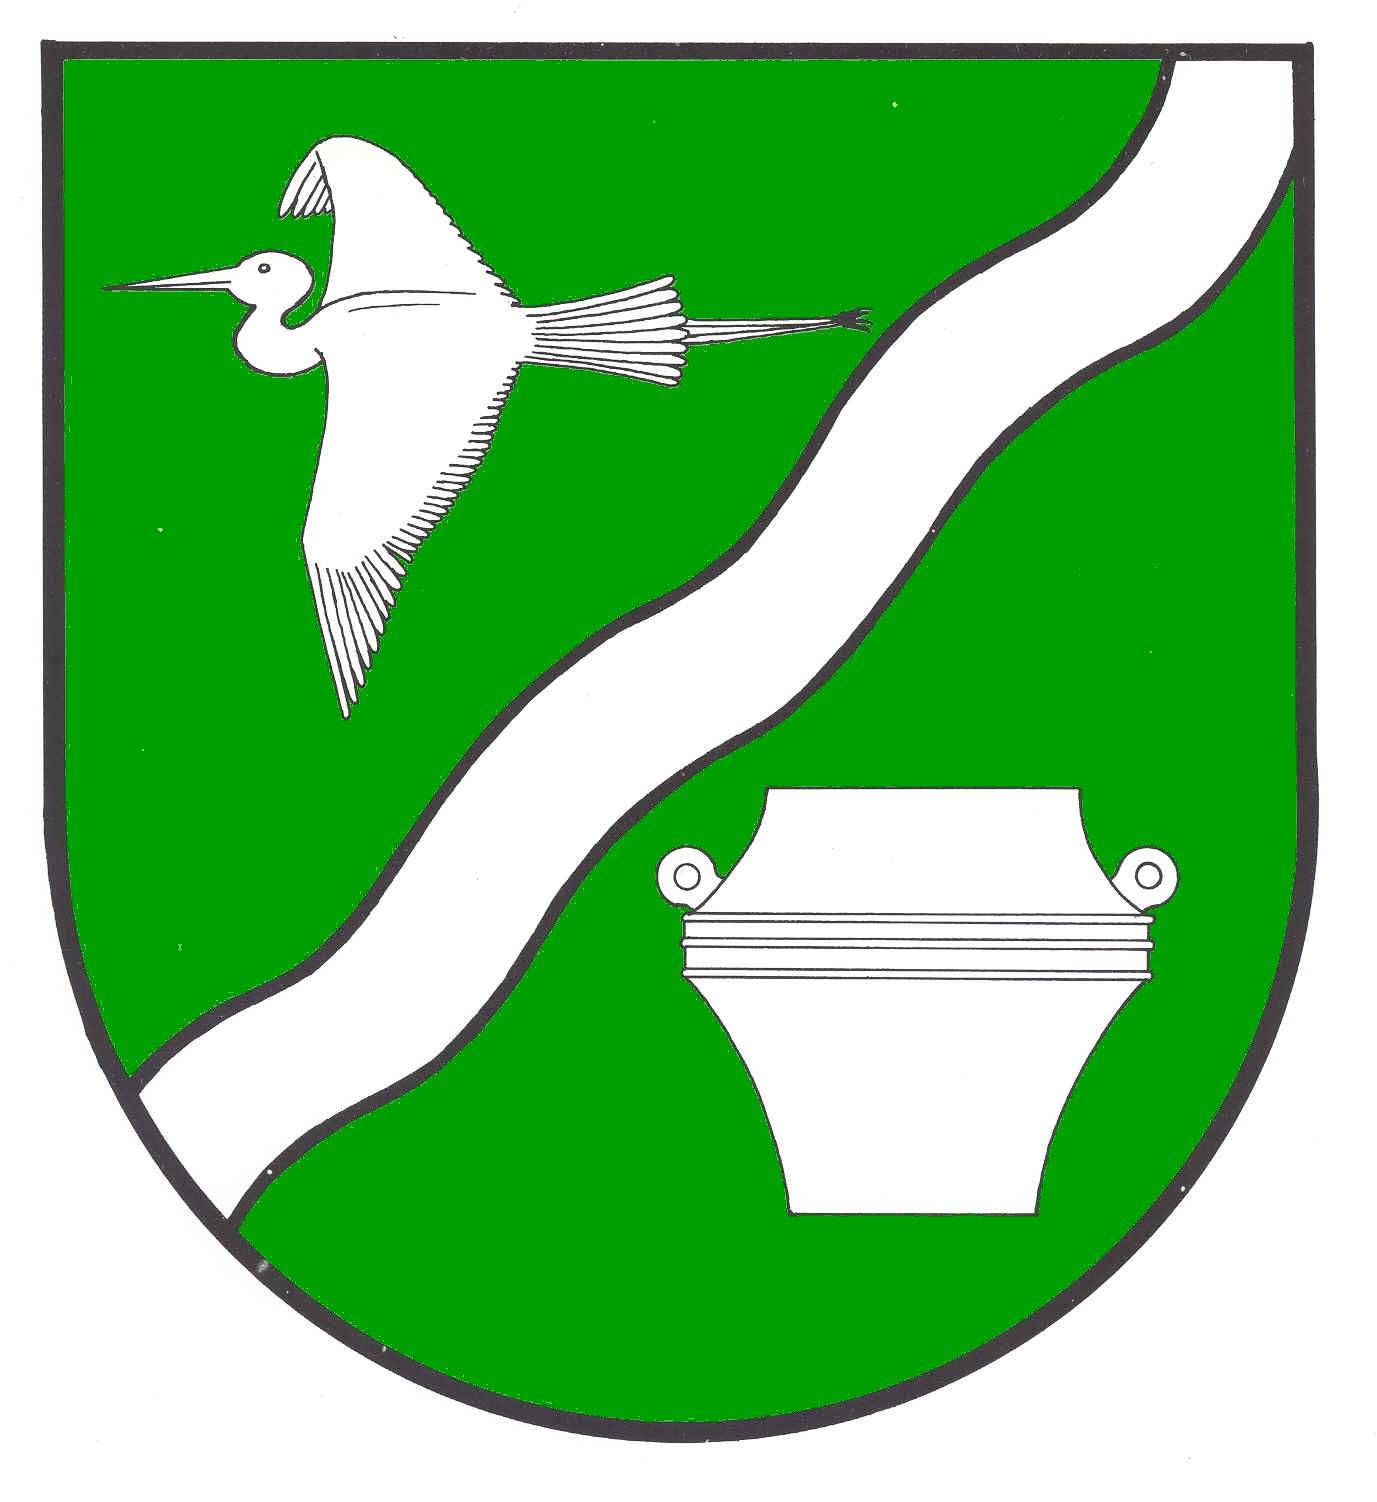 Wappen Gemeinde Hamdorf, Kreis Rendsburg-Eckernförde